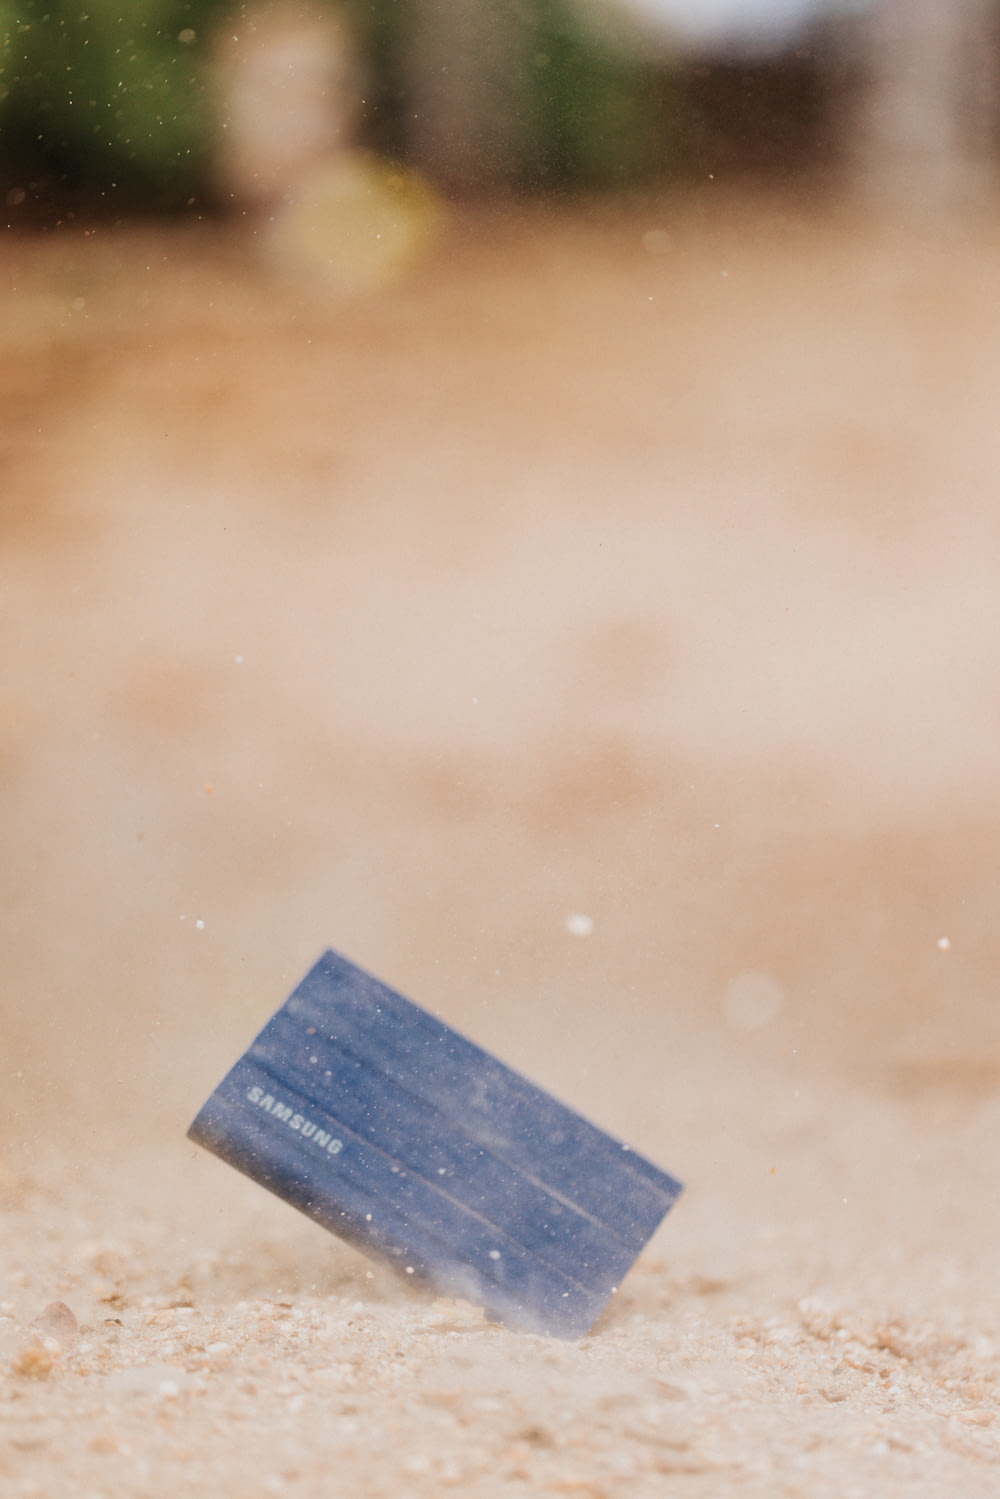 a blue rectangular object on a surface